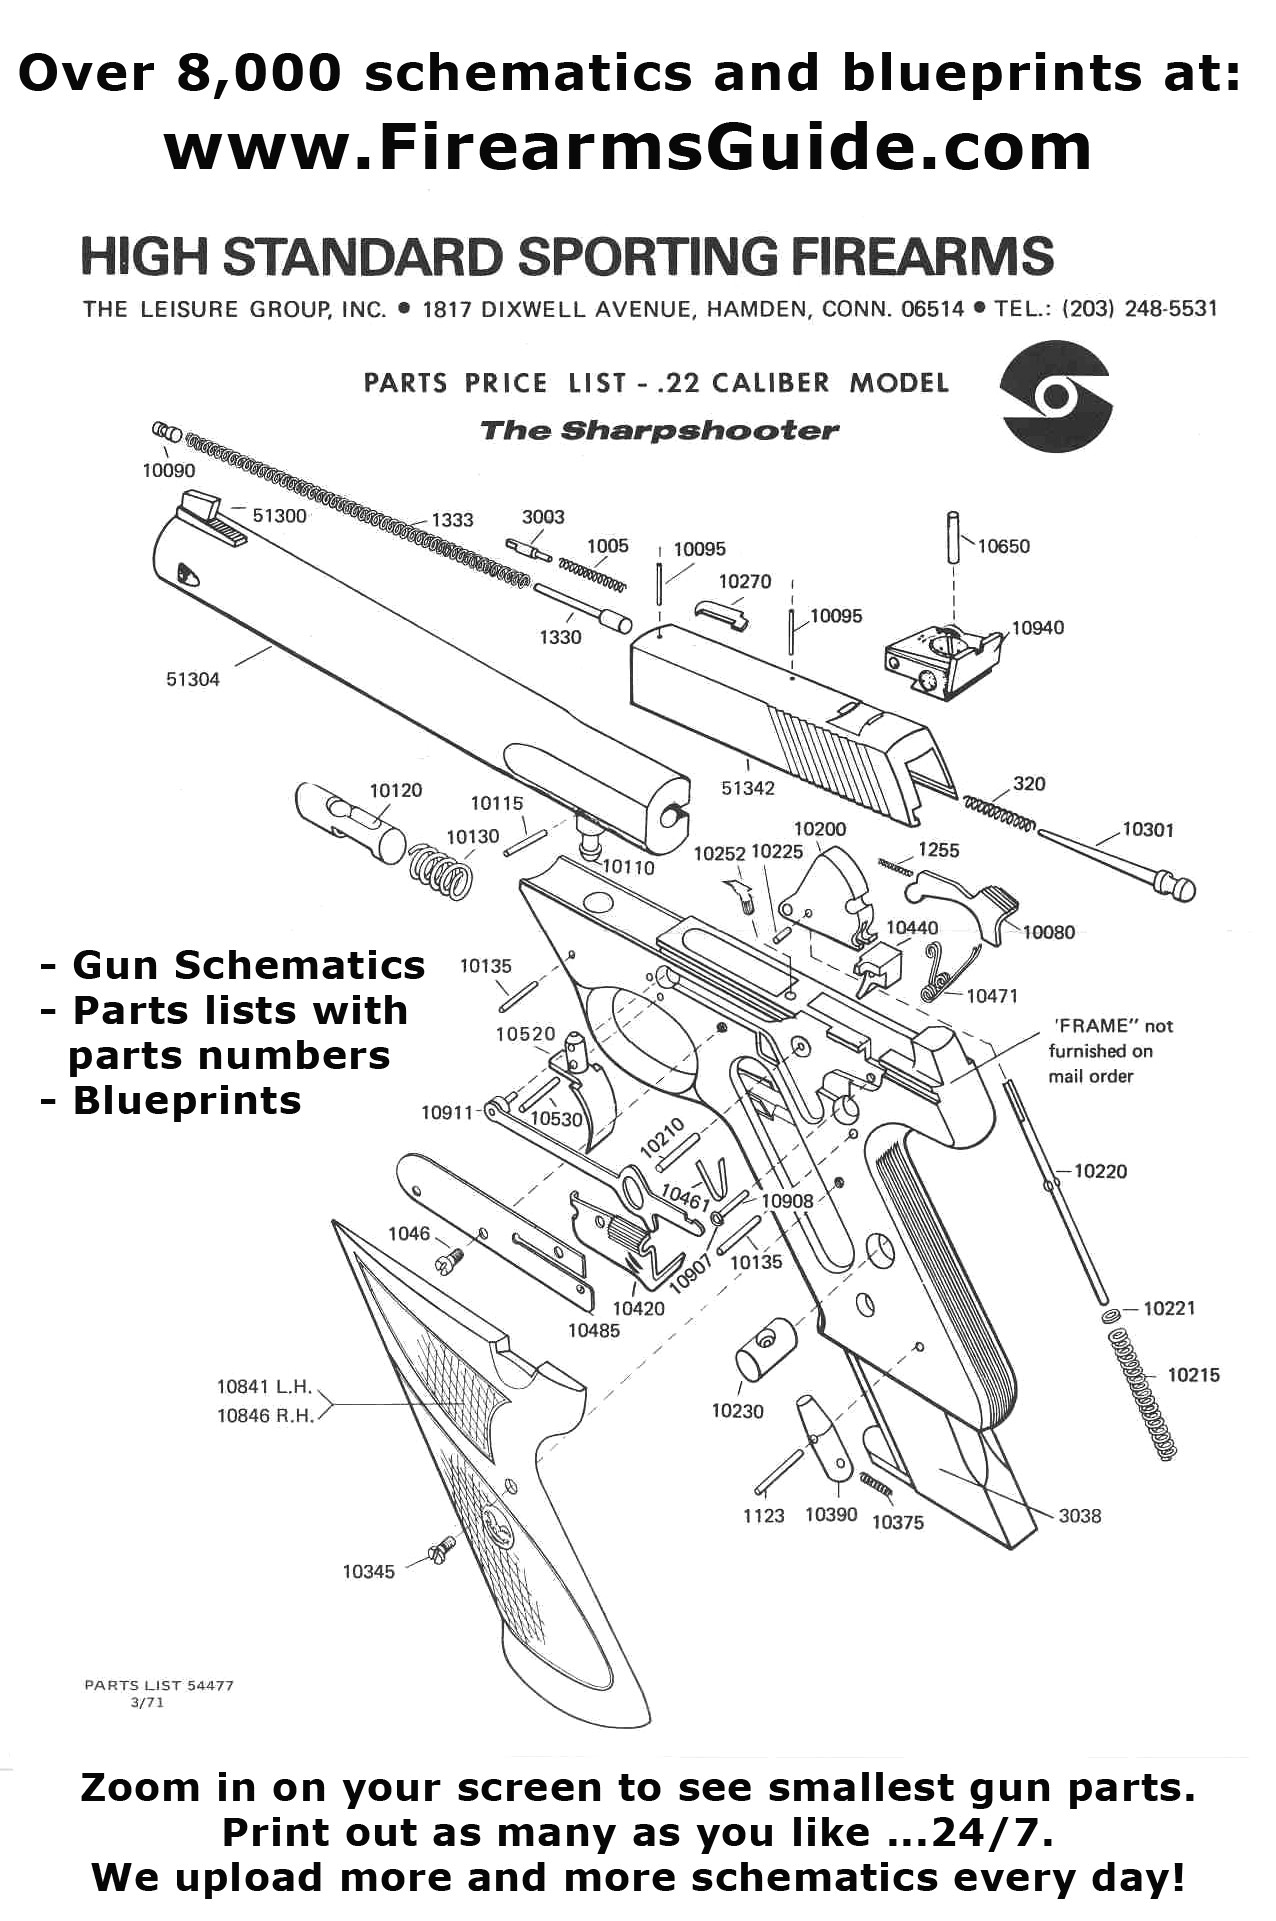 Pistols M1911A1 and Revolvers cal 38 1971 FM 23-35 